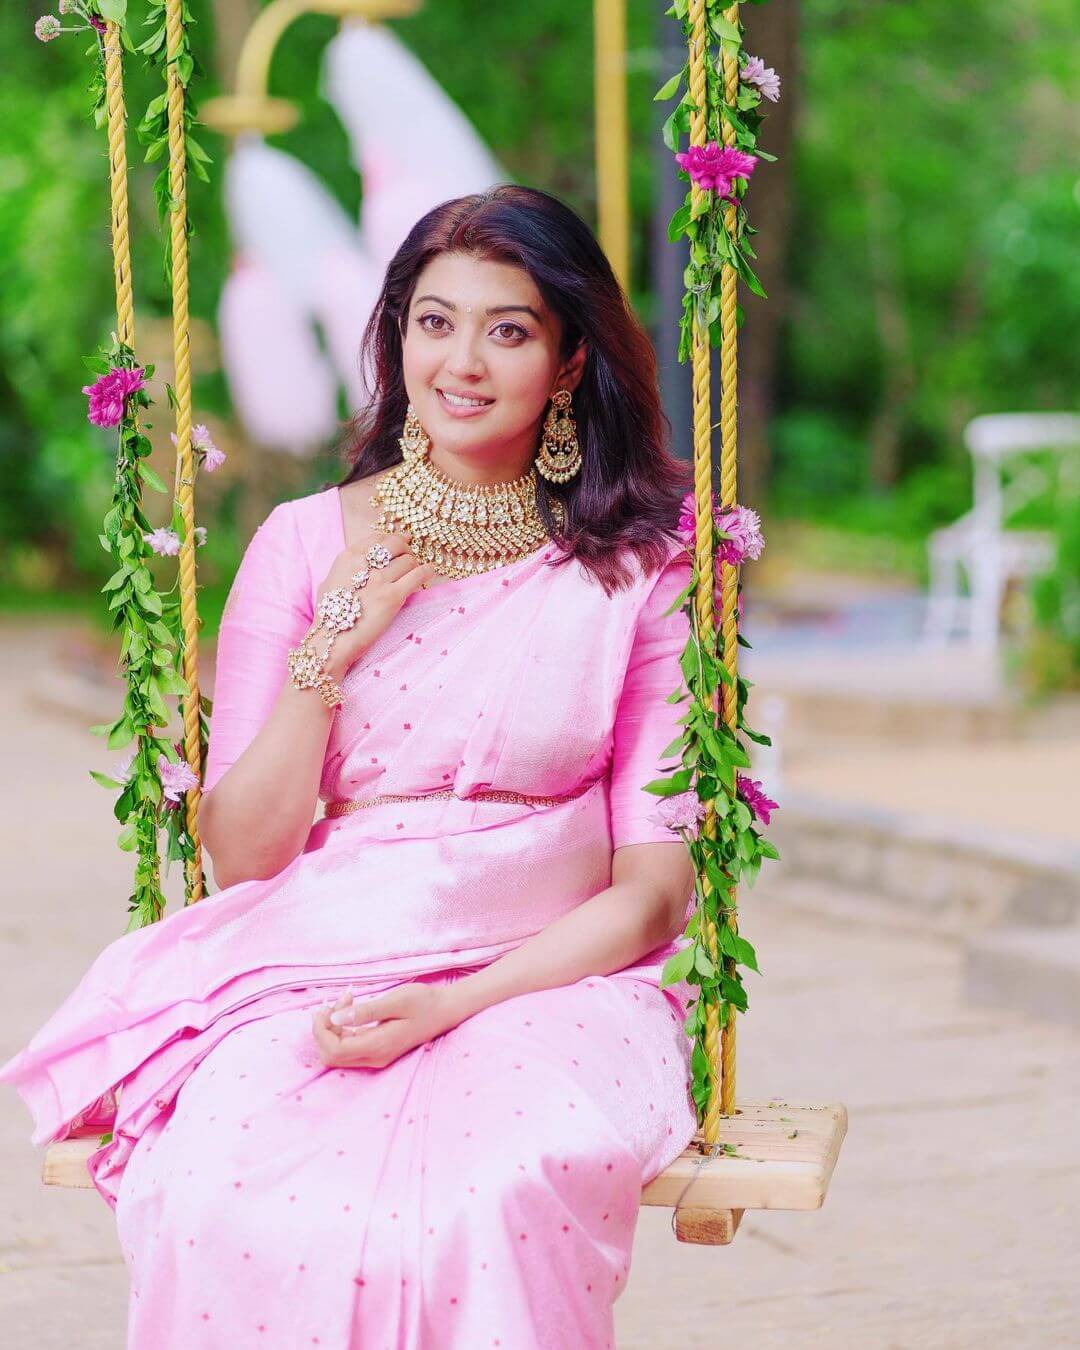 Pranitha Subhash Elegant Baby Pink Saree Look is Simply Cute